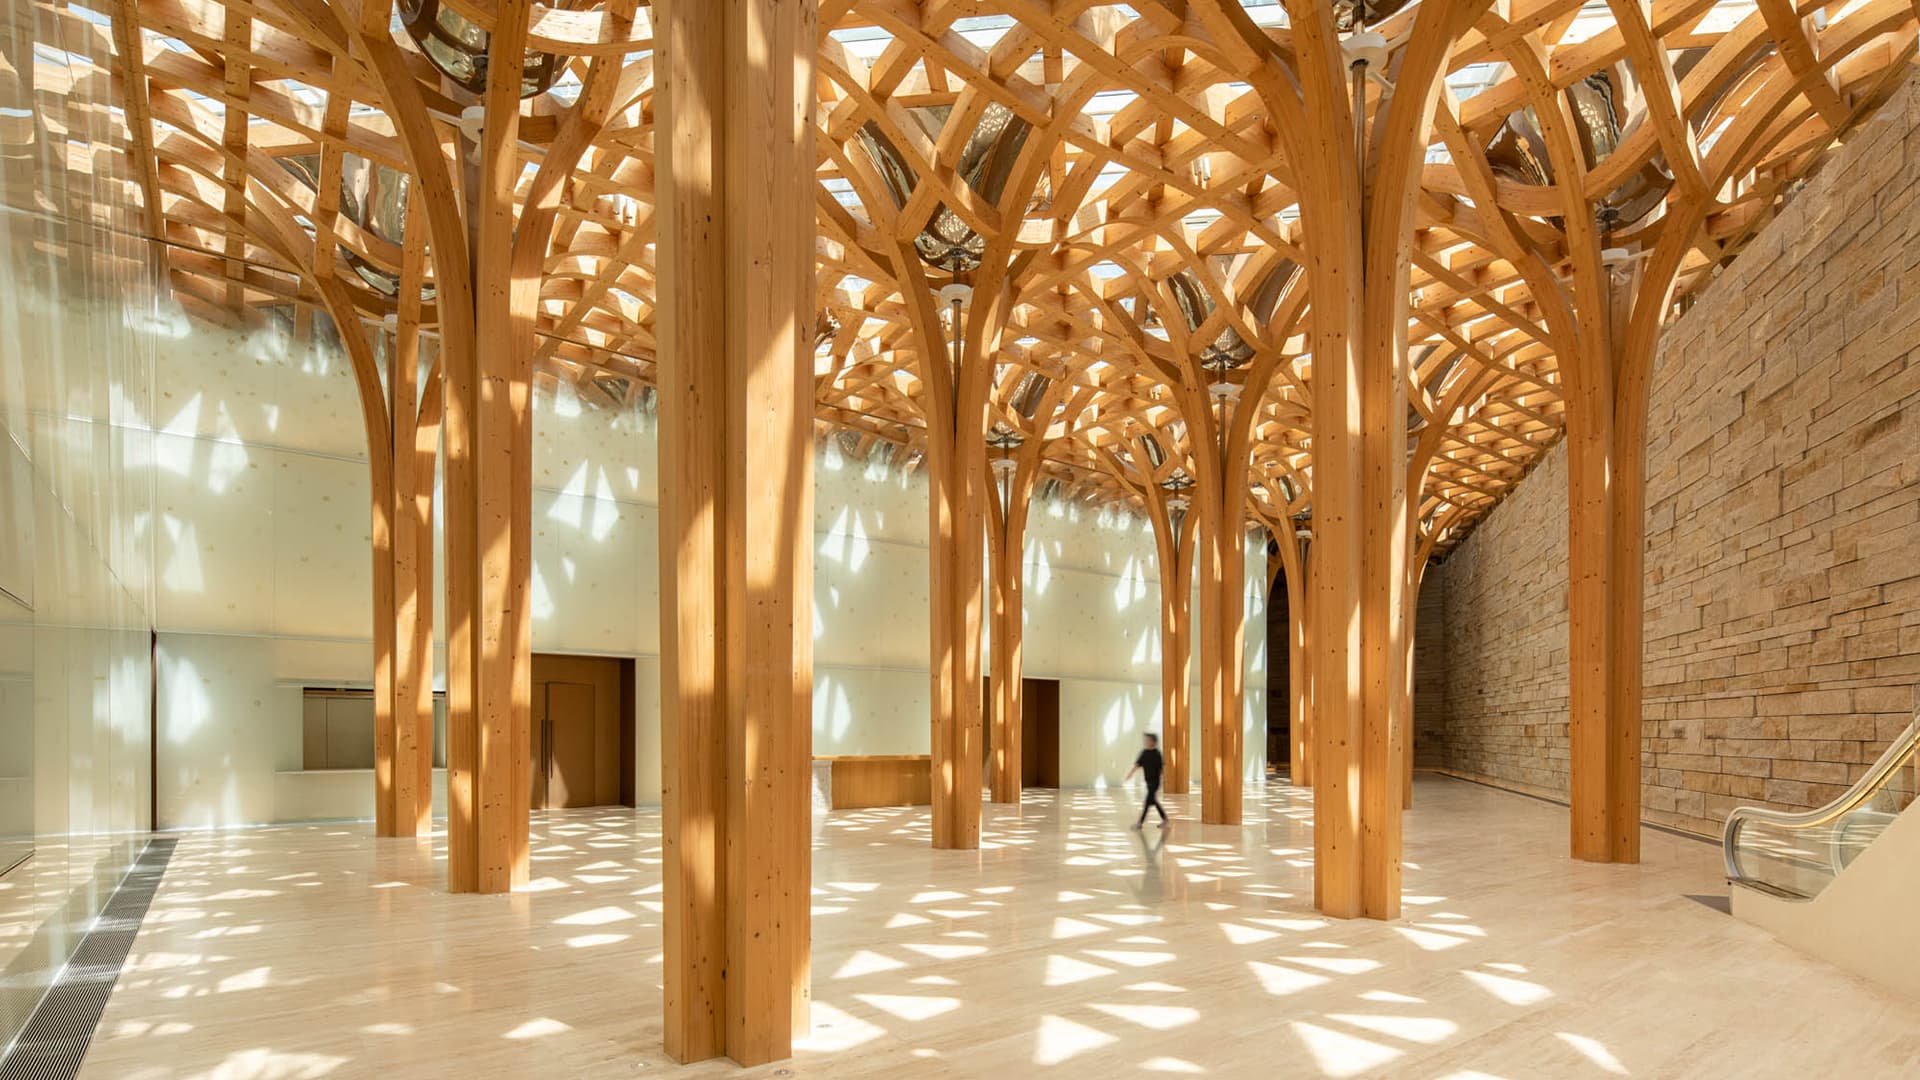 Shigeru Ban: Timber in Architecture